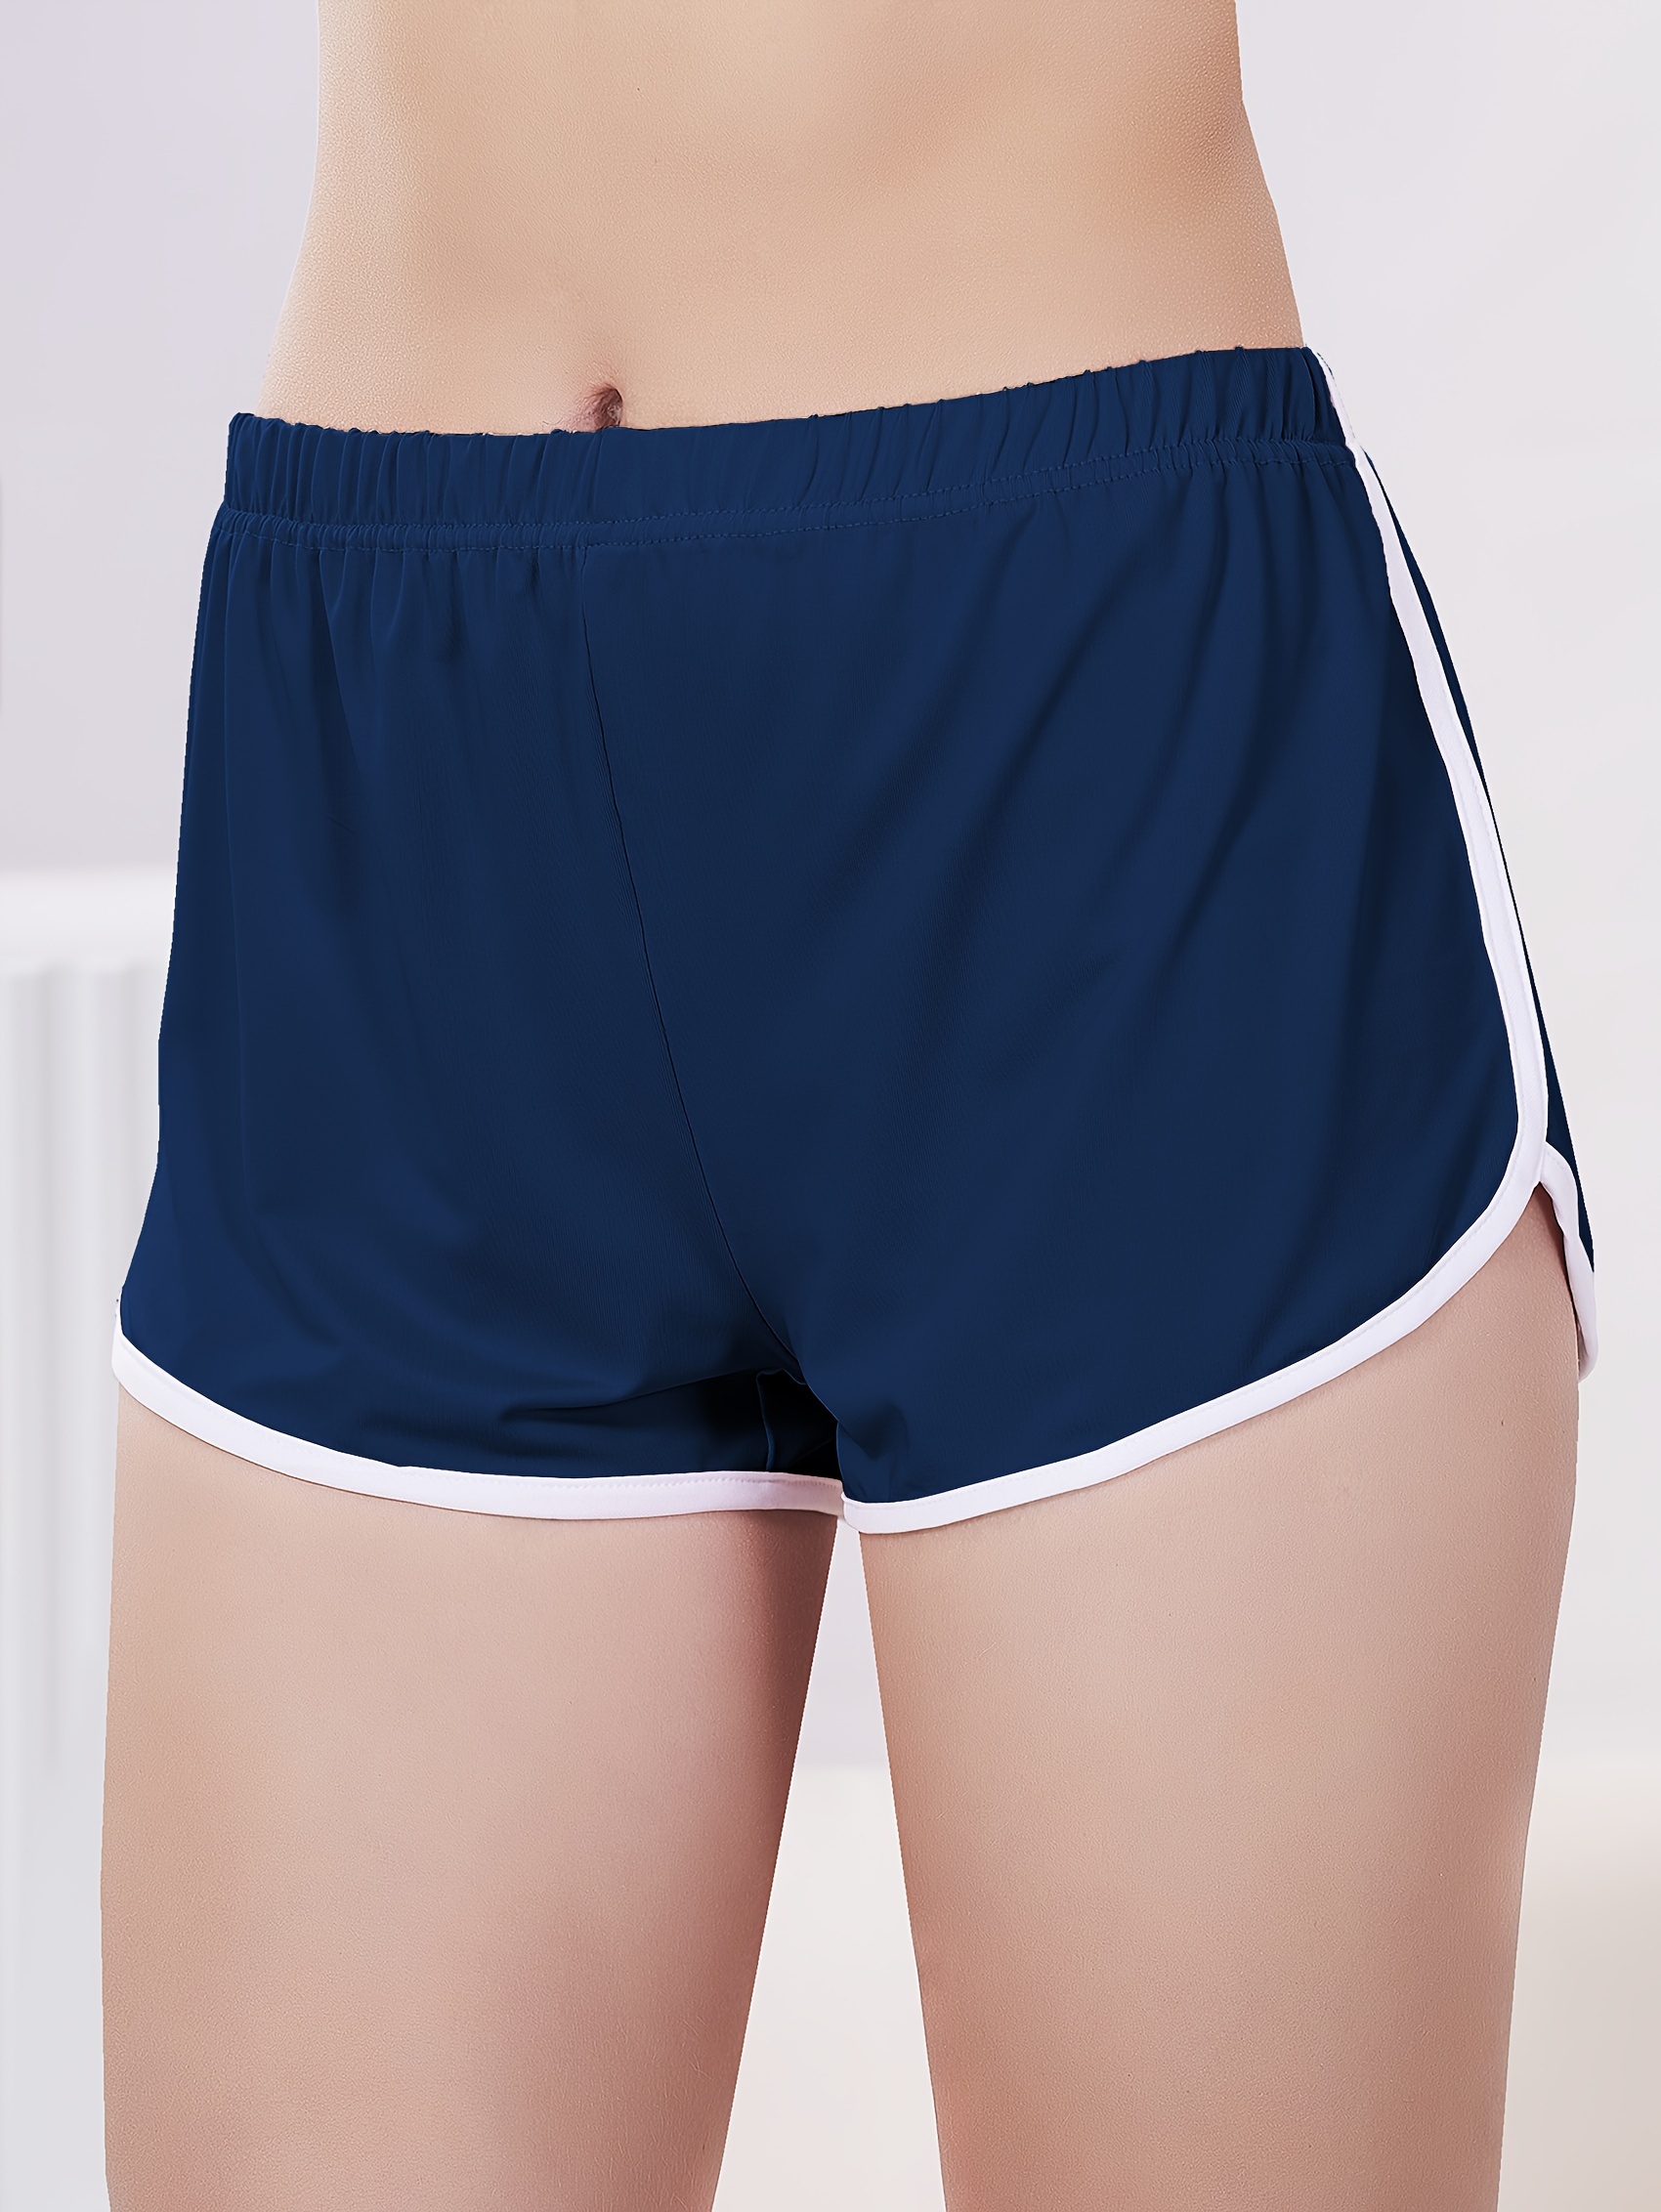 womens sports sleep bottoms plus size contrast binding elastic waist home dolphin shorts